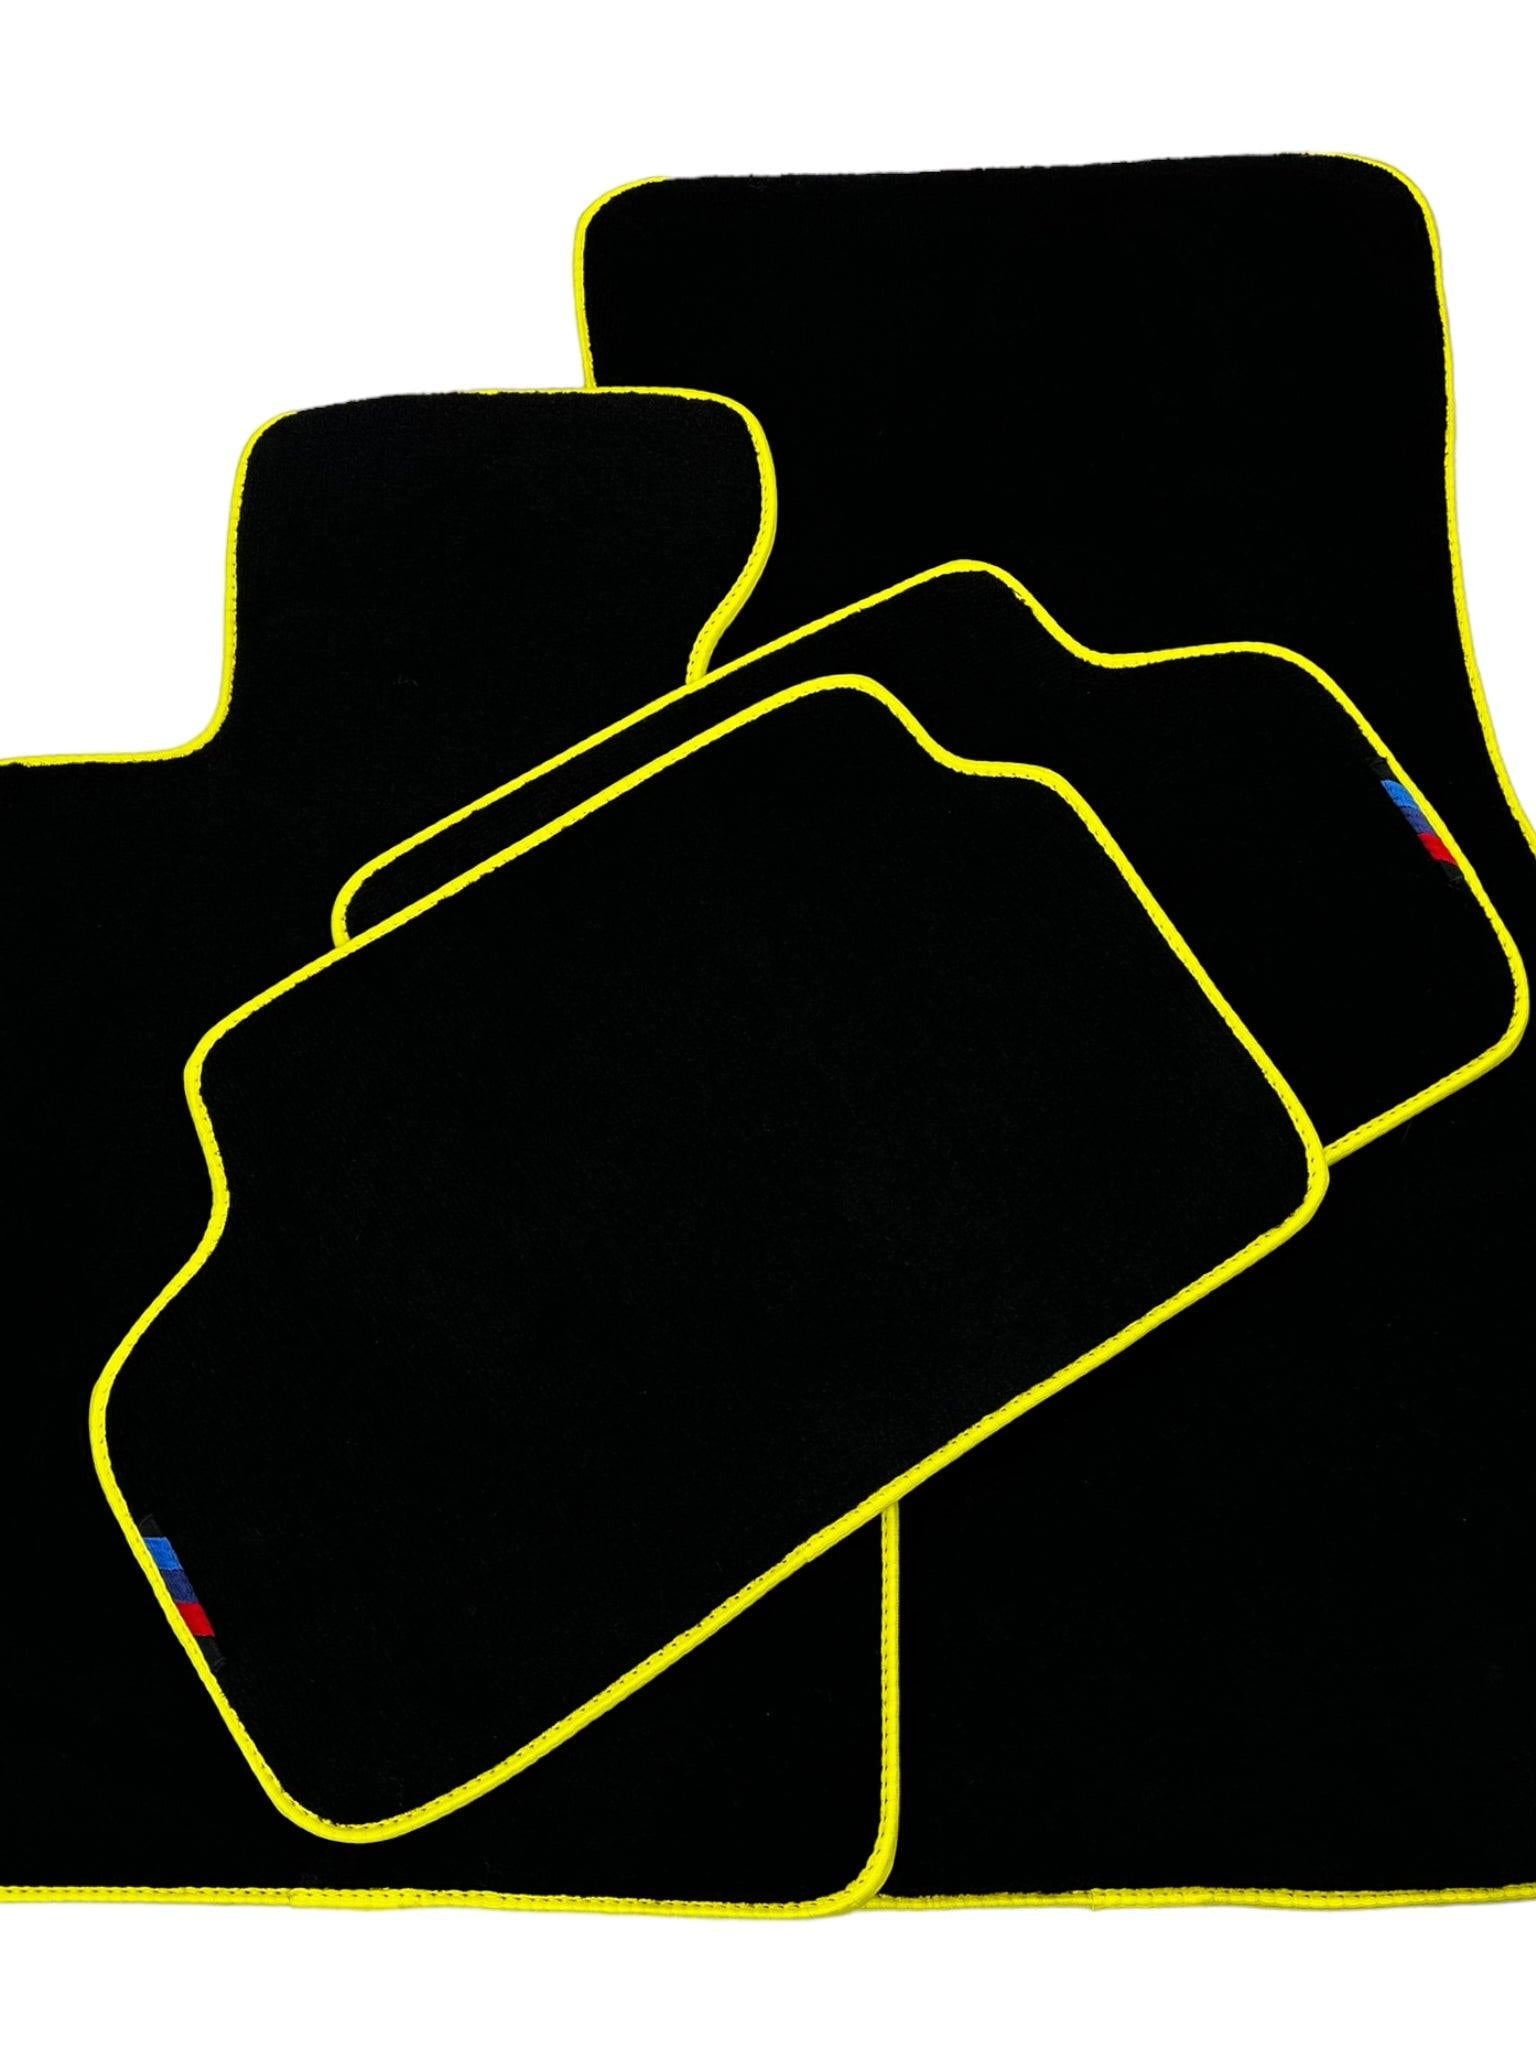 Black Floor Floor Mats For BMW 5 Series E60 | Fighter Jet Edition | Yellow Trim